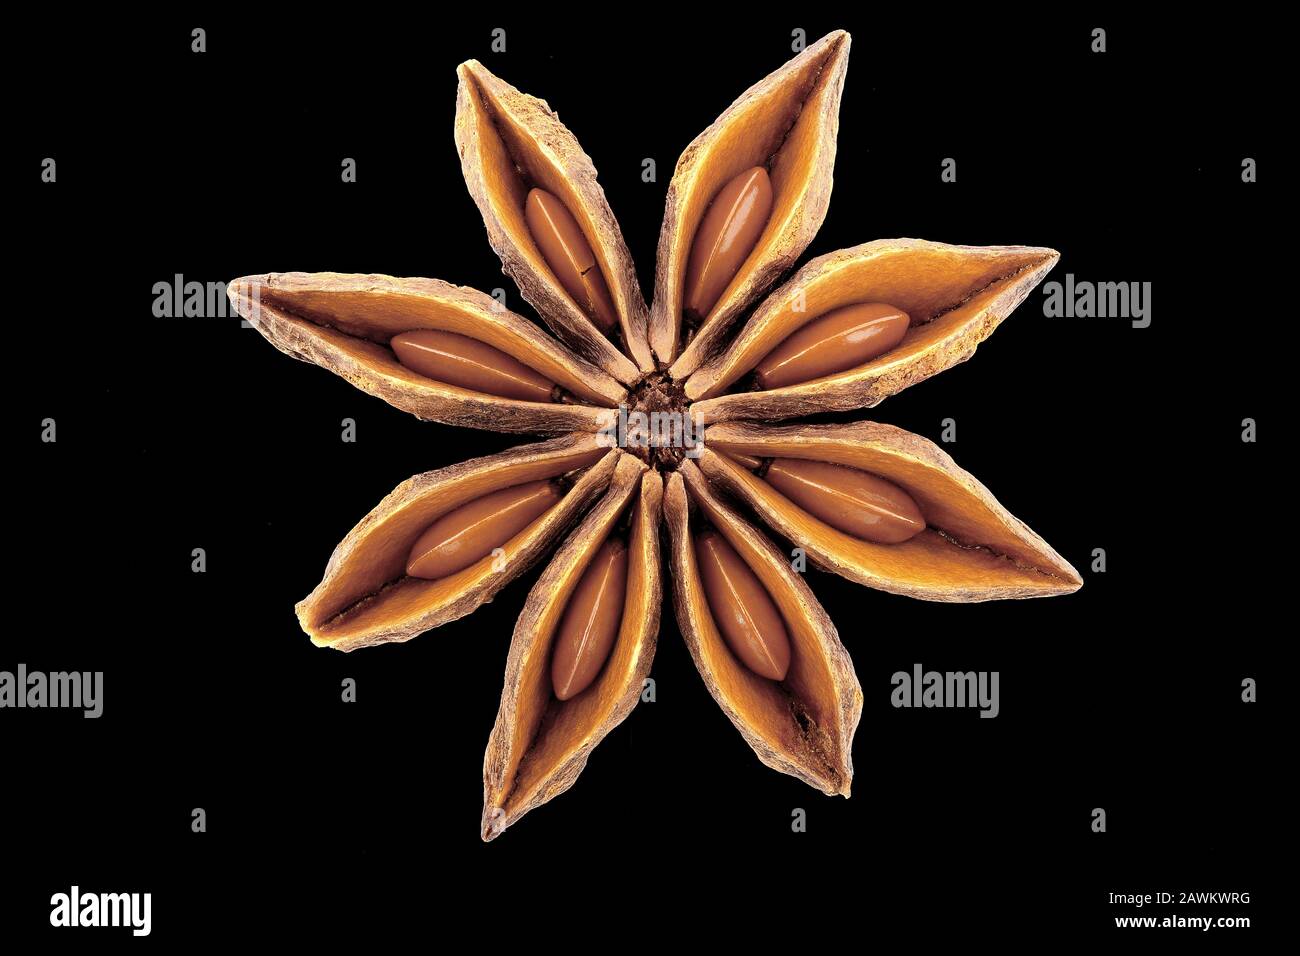 Illicium verum, Sternanis, Echter Sternanis, Frucht mit Samen, Nahaufnahme,  Samen 5-10 mm lang Stockfotografie - Alamy